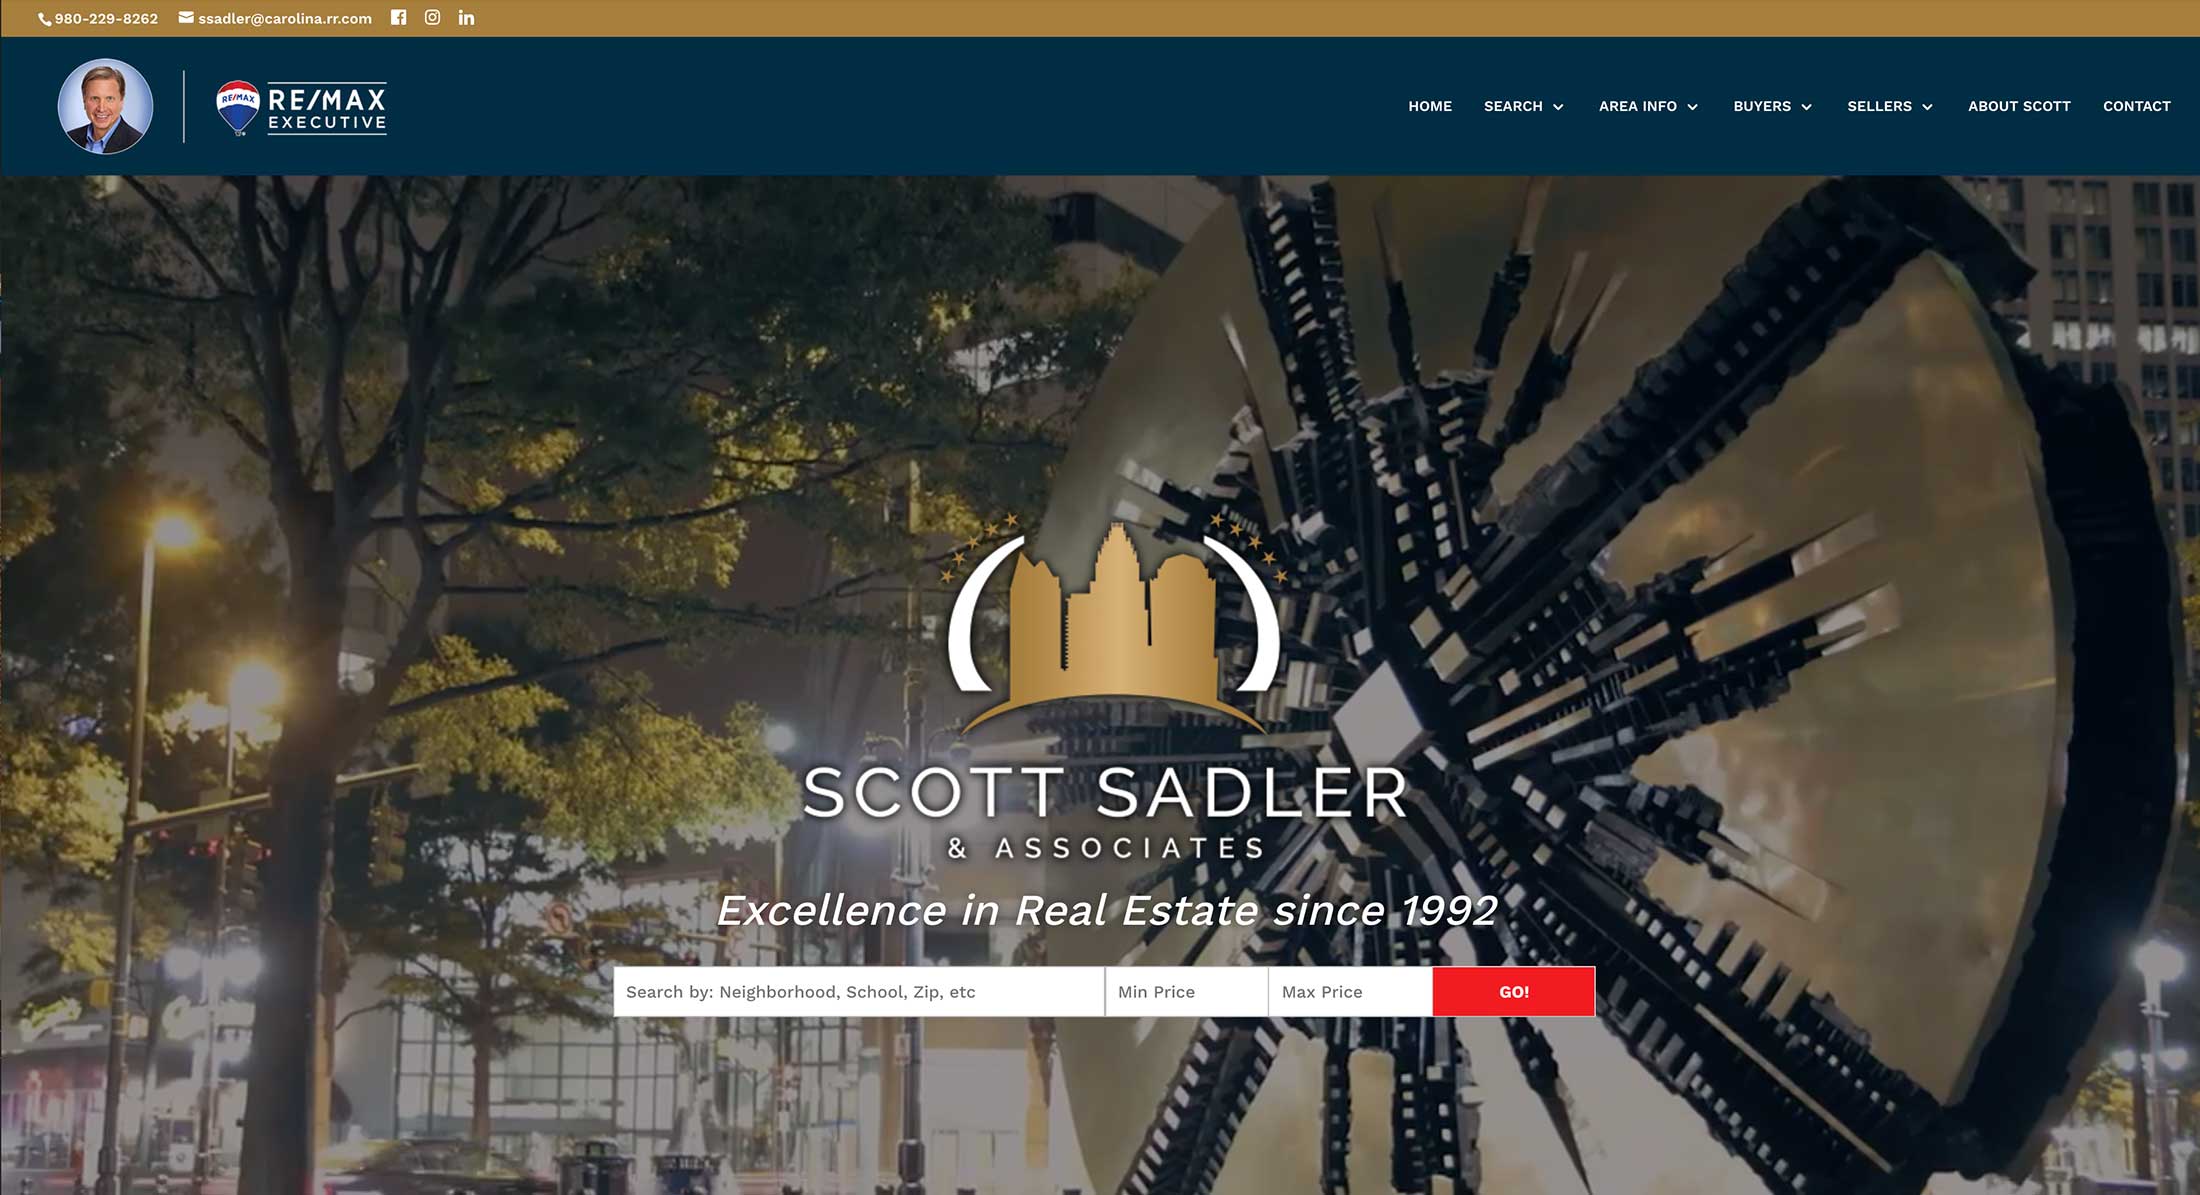 Scott Sadler and Associates